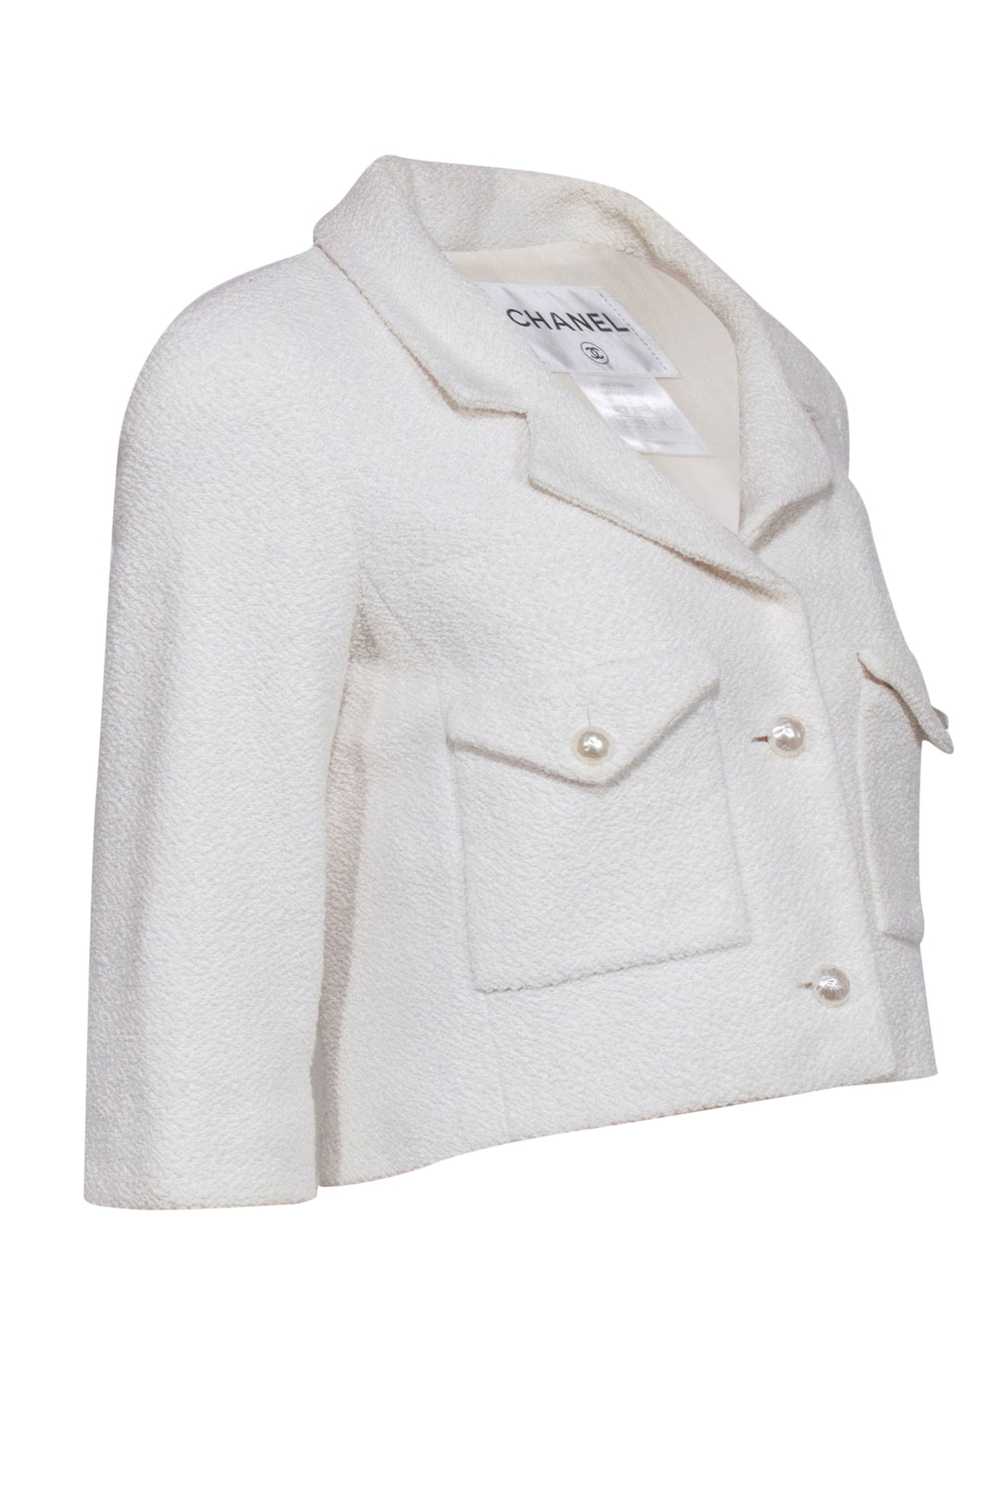 Chanel - Cream Boucle Tweed Blazer w/ Faux Pearl … - image 2